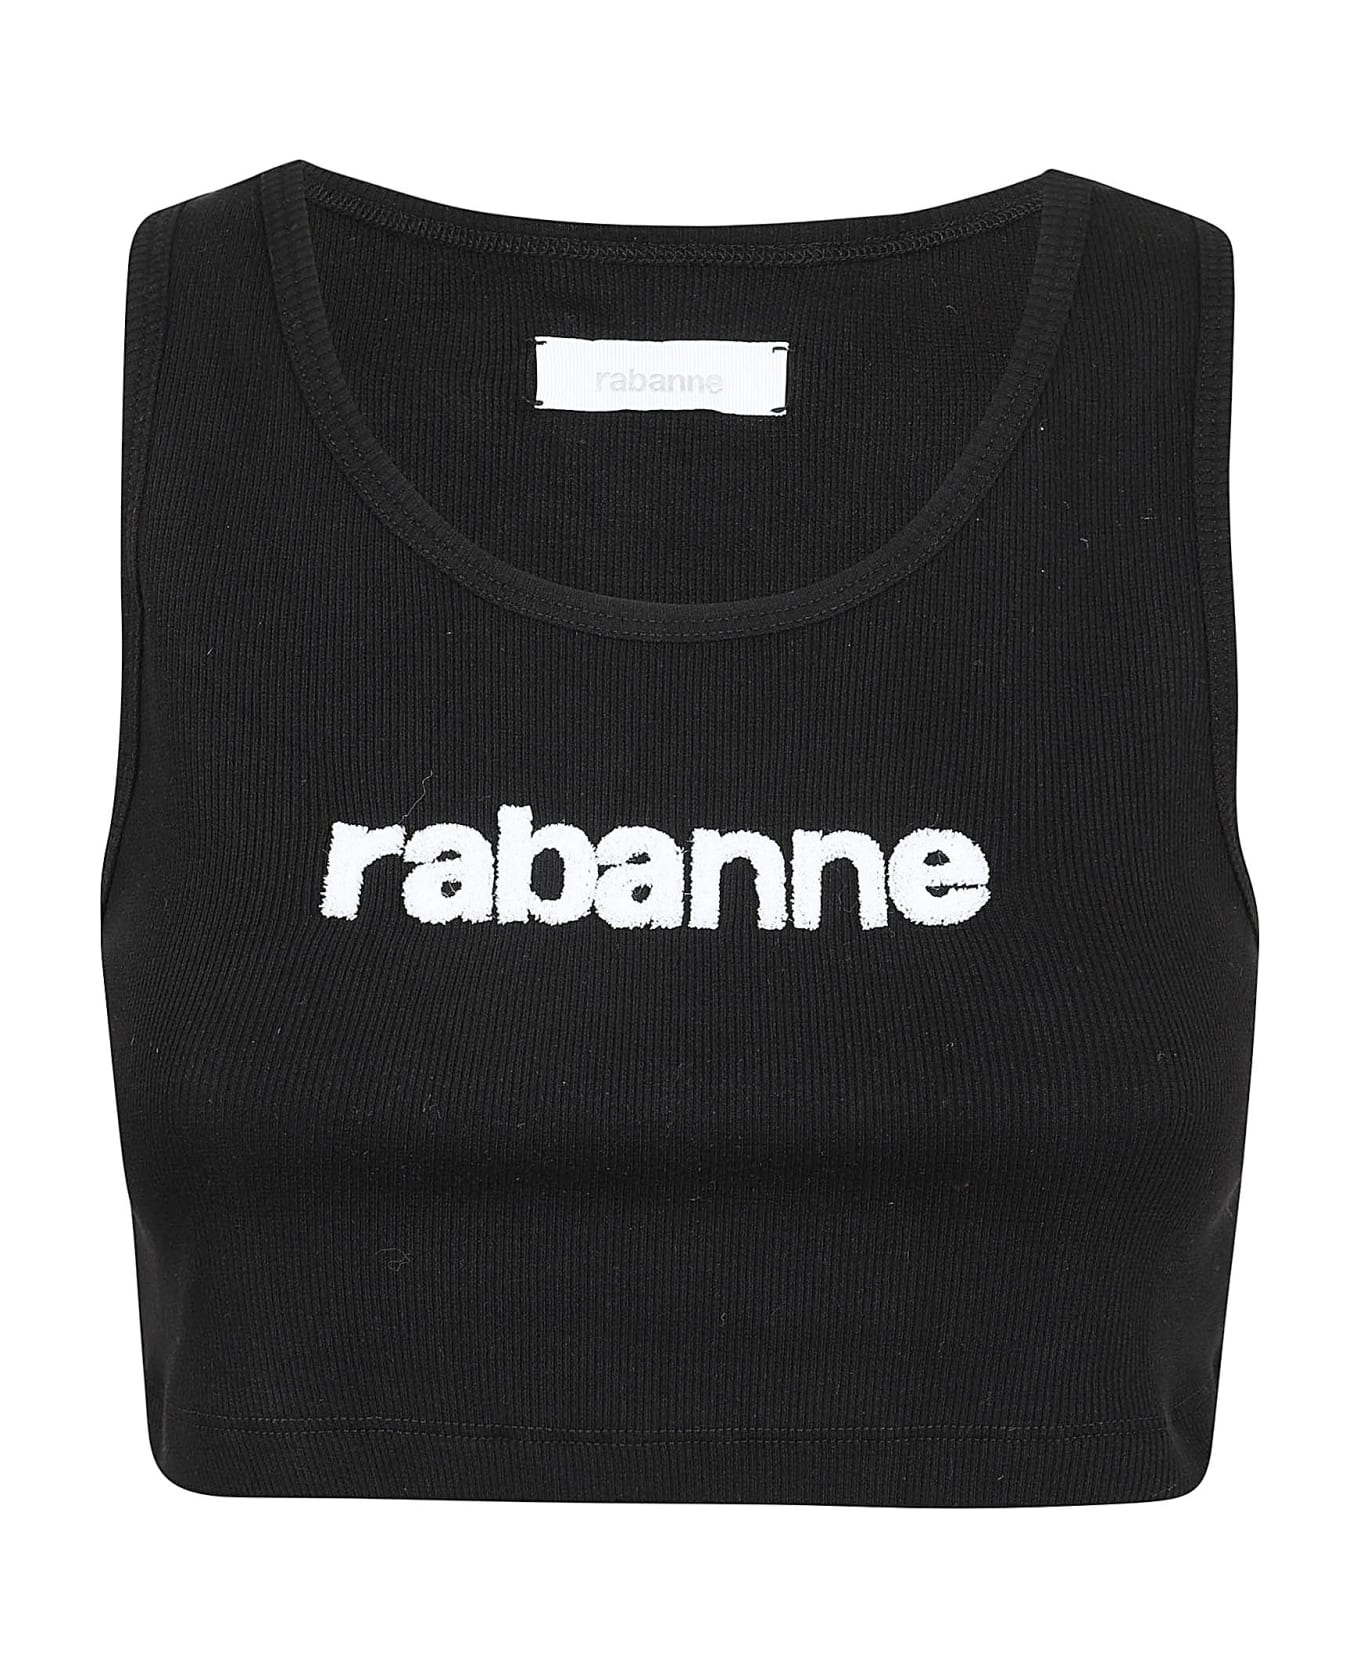 Paco Rabanne Tee Shirt - Black